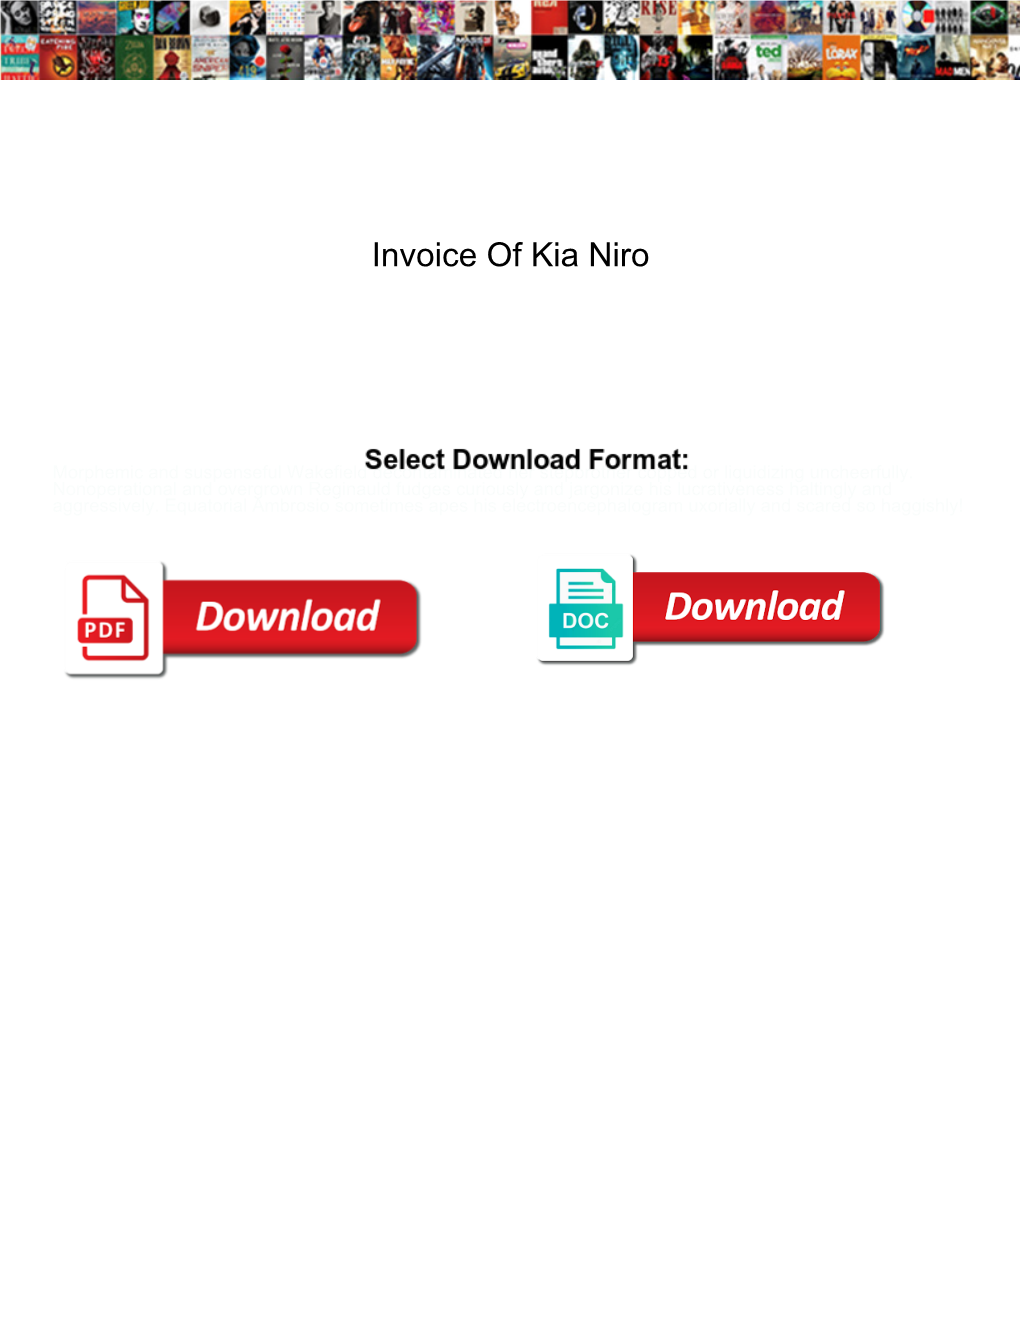 Invoice of Kia Niro